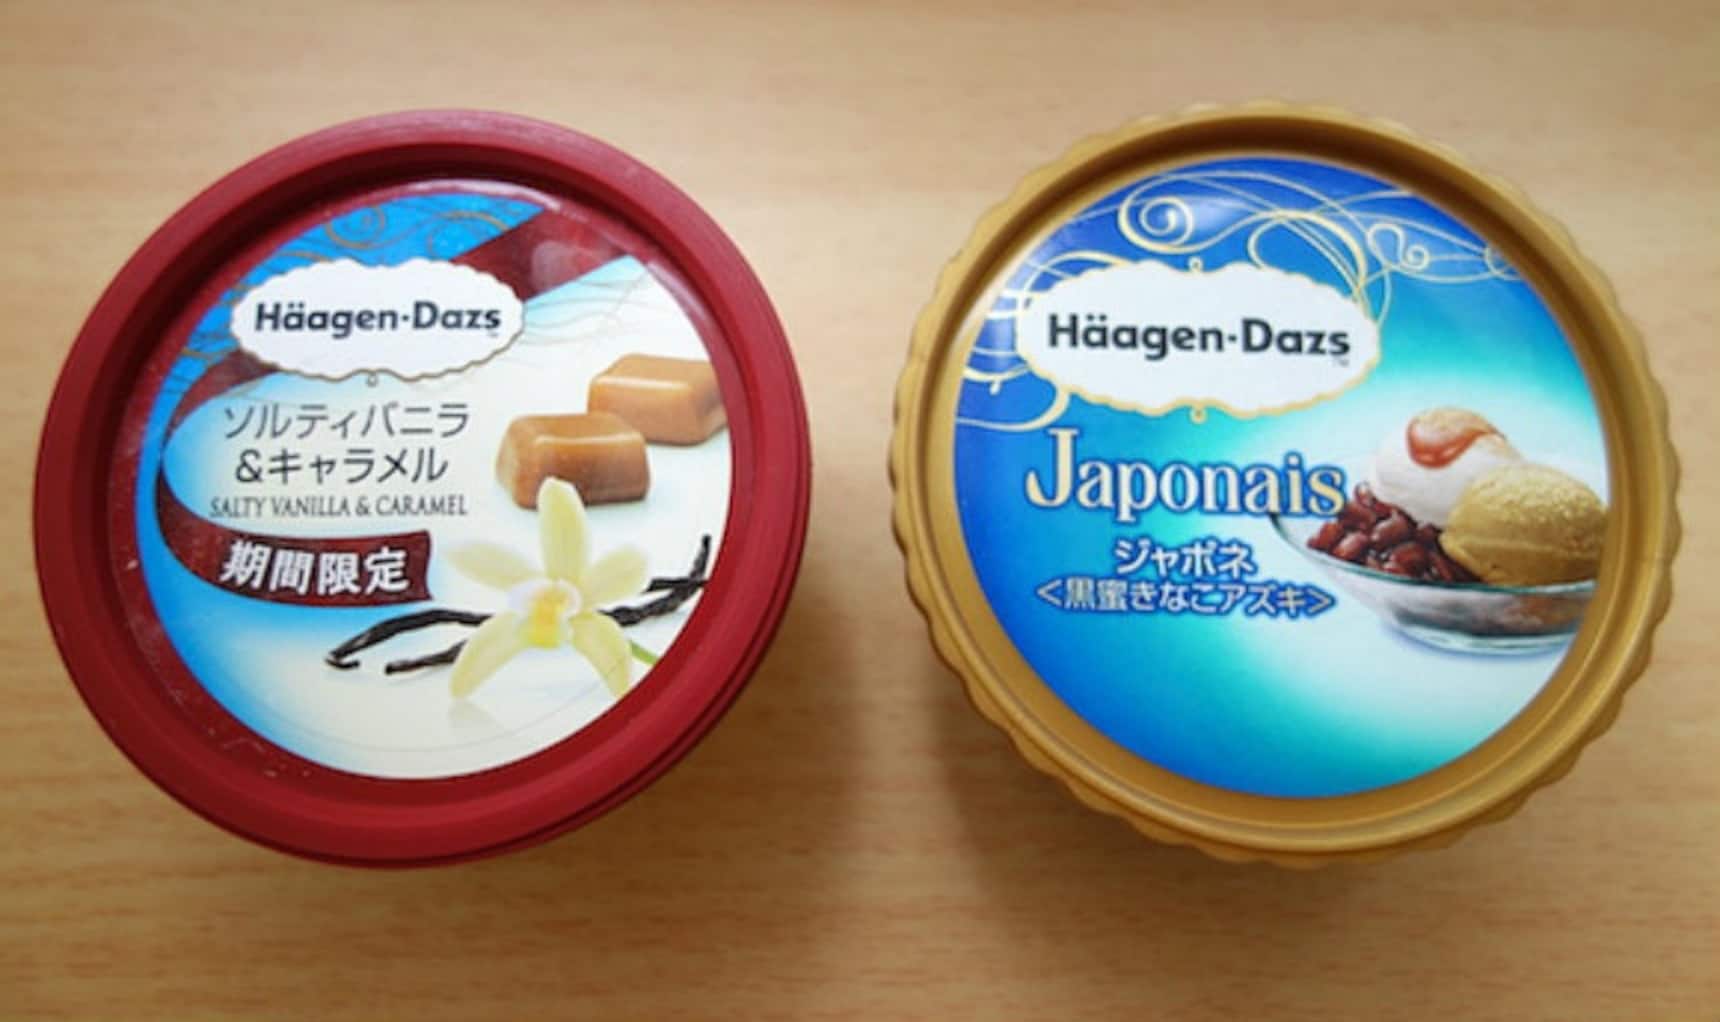 Beat the Heat With Häagen-Dazs Ice Cream